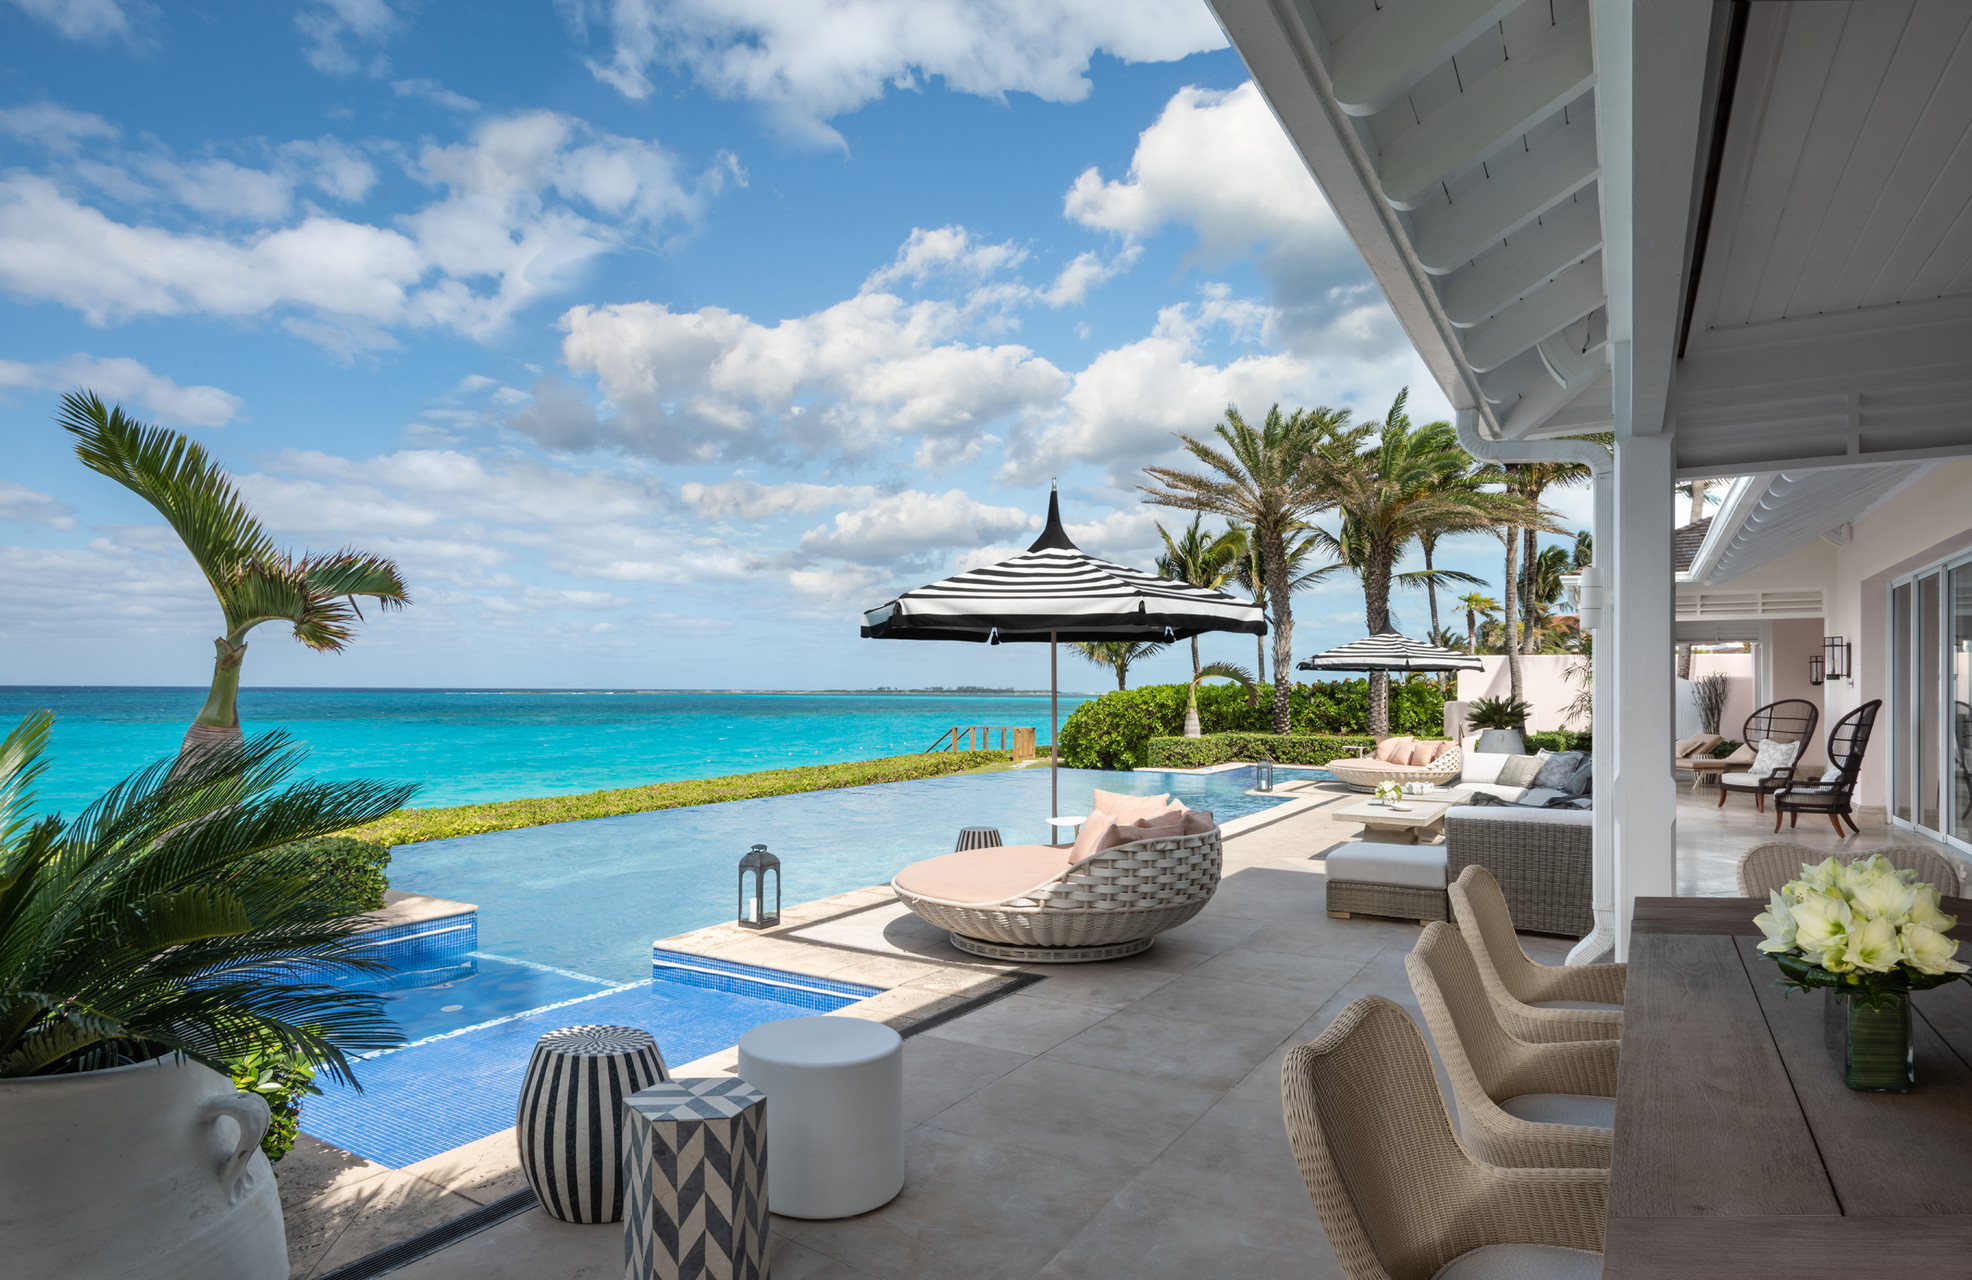 Resort in the Bahamas